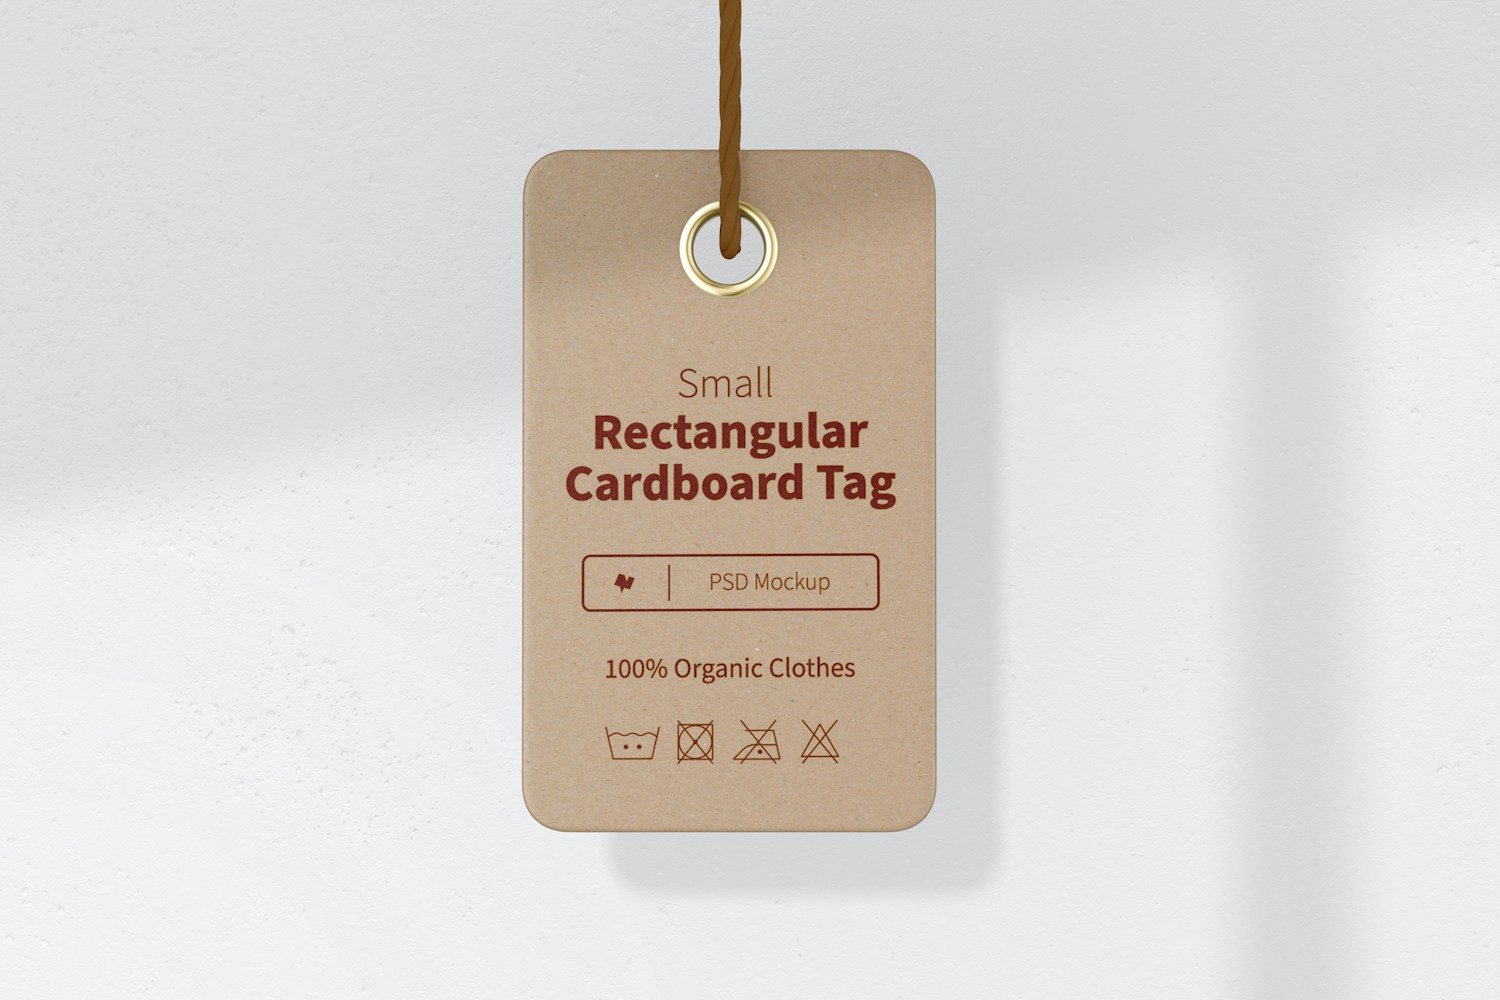 Small Rectangular Cardboard Tag Mockup, Front View